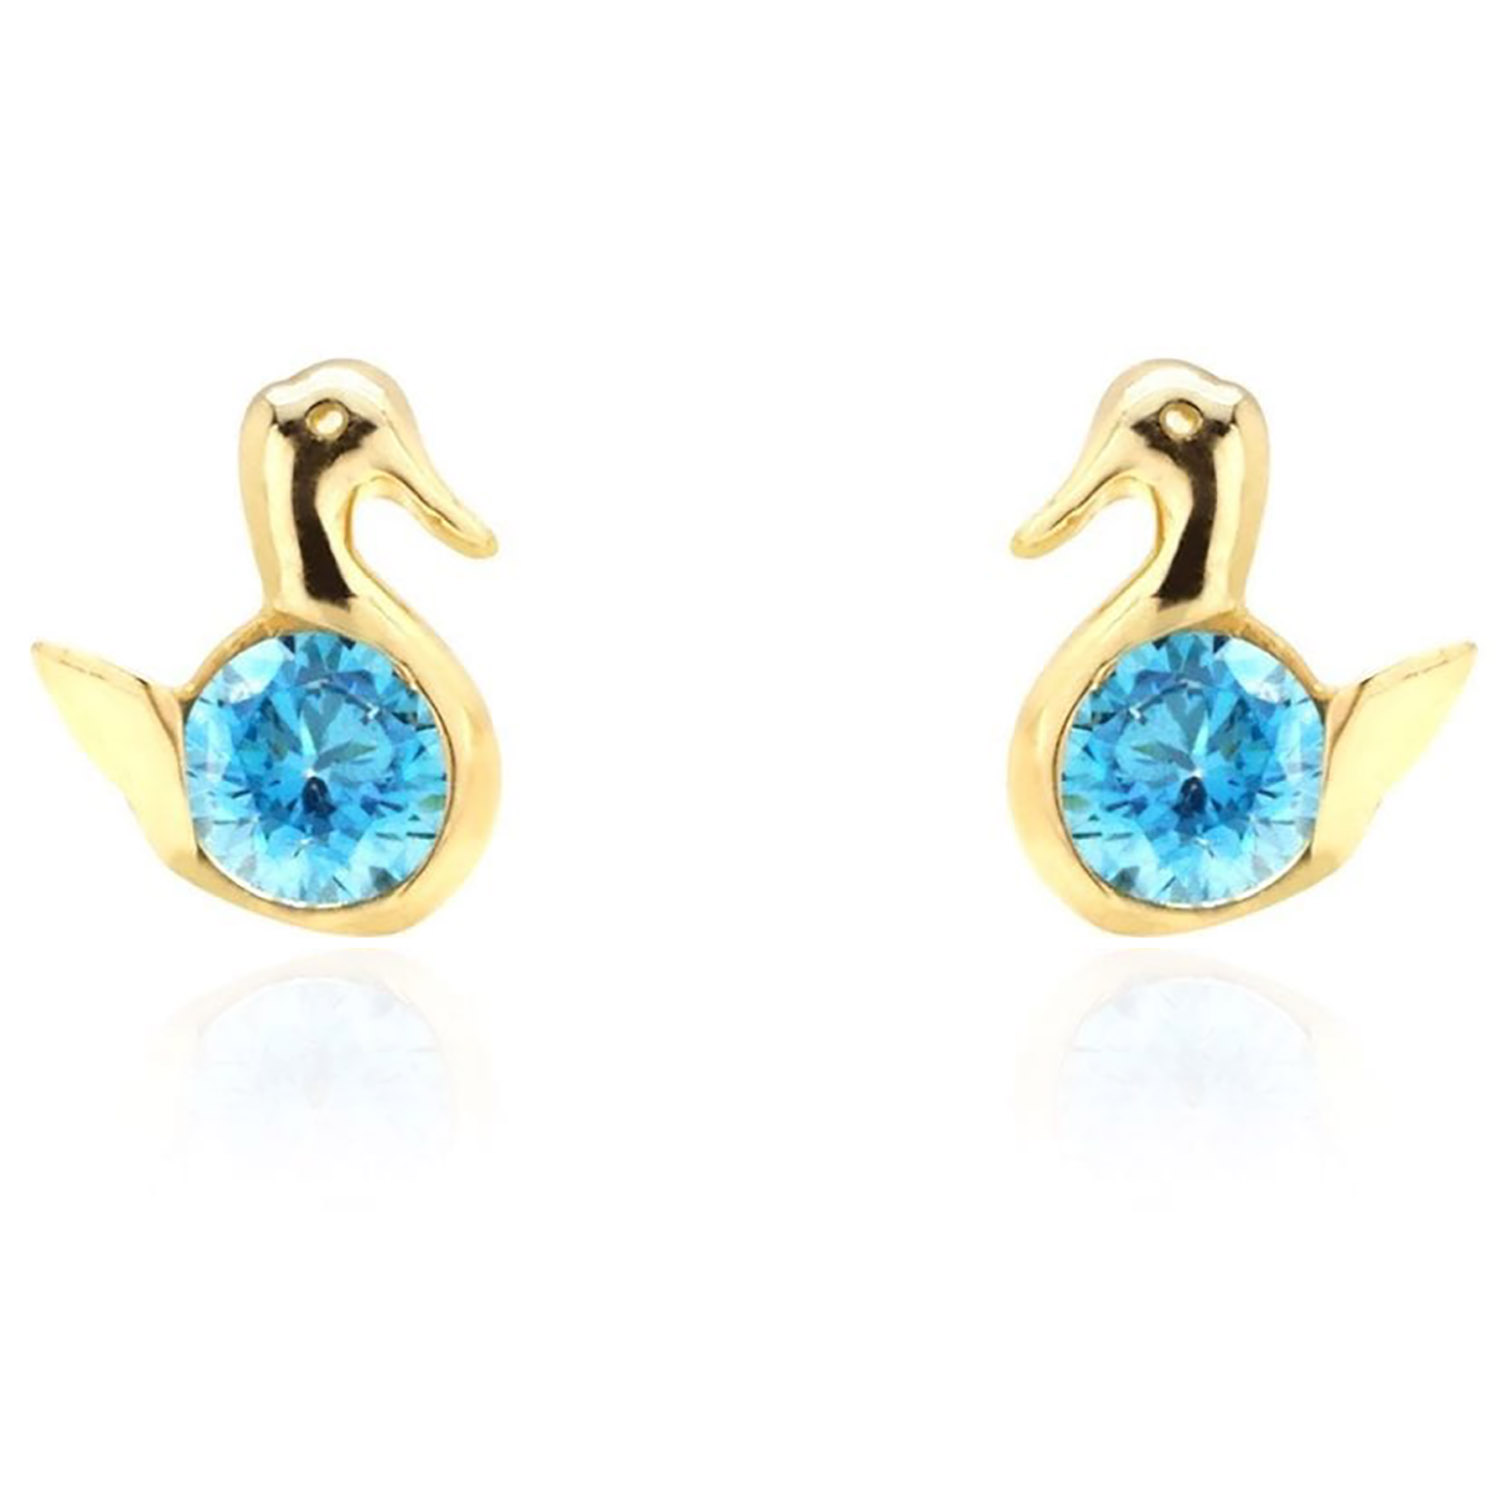 14K Yellow Gold Round Cut Simulated Birthstone Duck Baby Screwback Stud Earrings - December - Blue Topaz